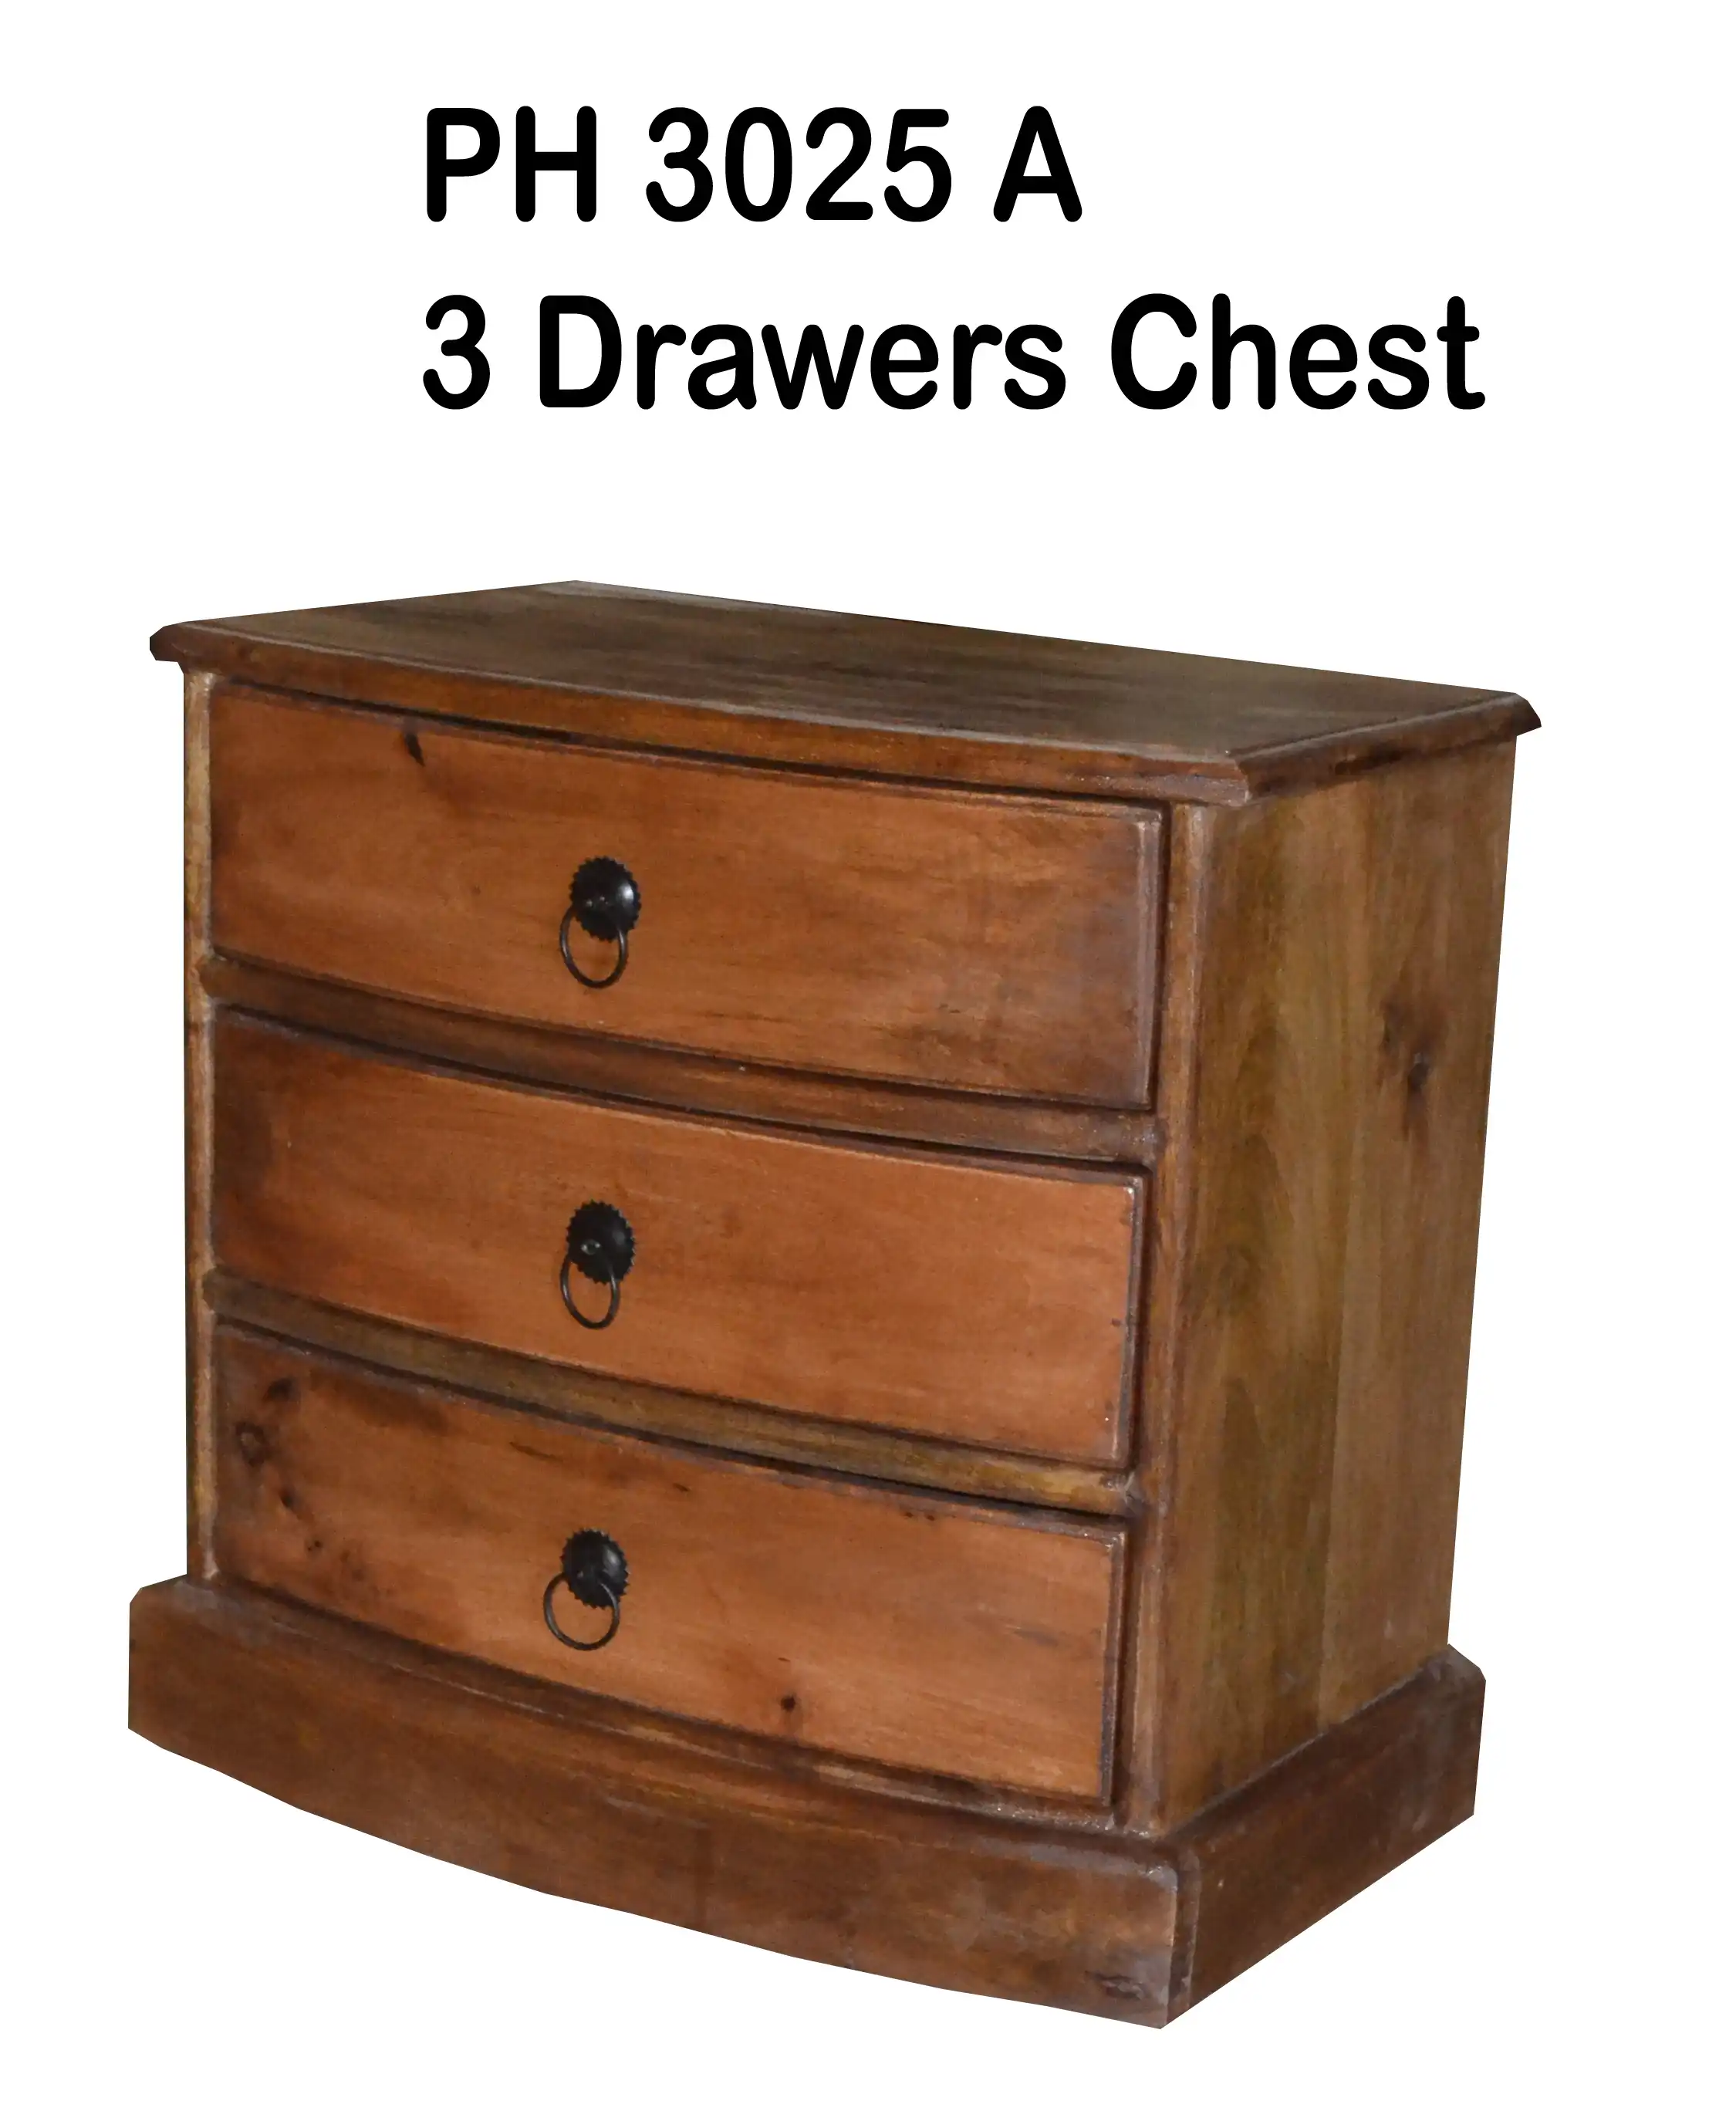 Half Round Cabinet with 3 Drawers - popular handicrafts